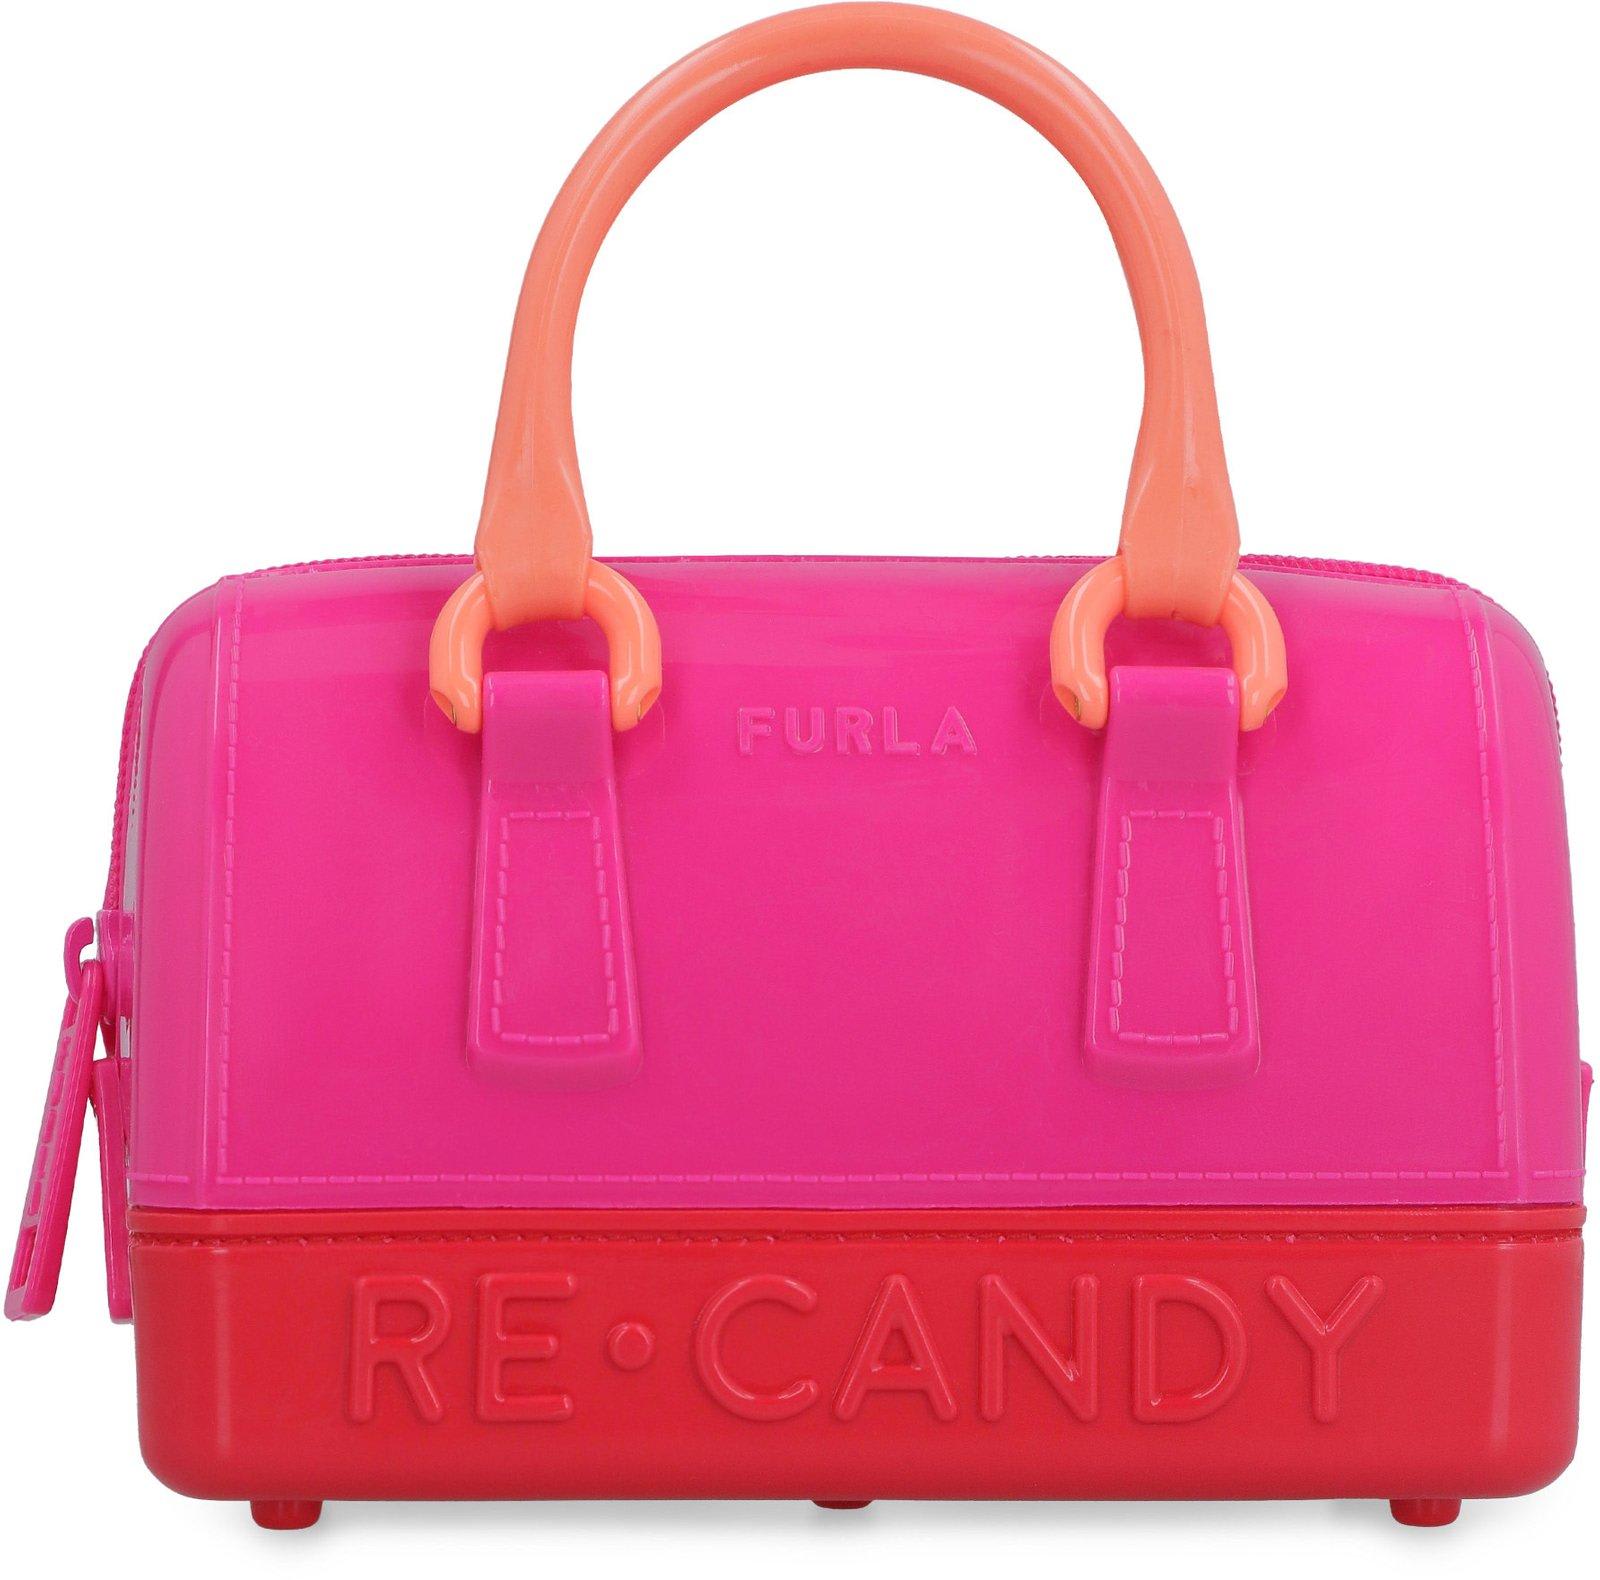 Furla Candy Top Handle Bag